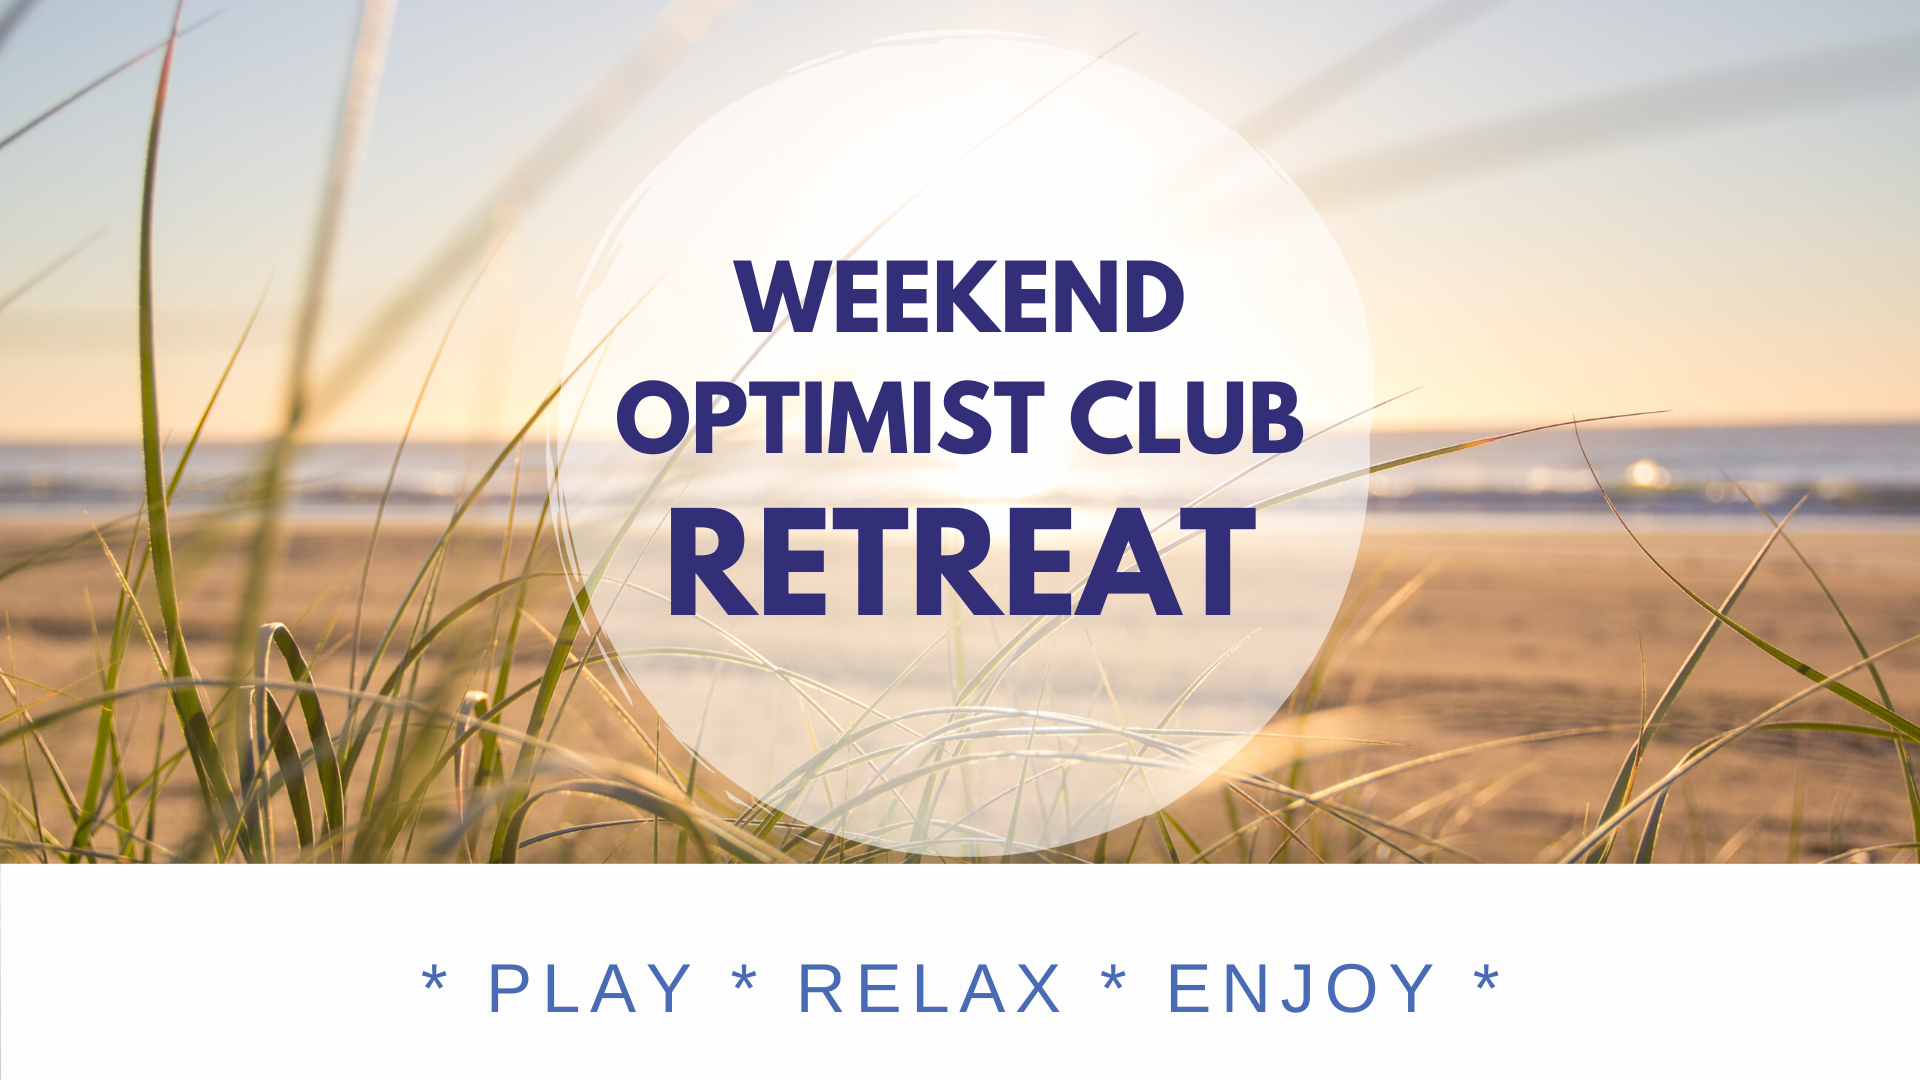 Weekend Optimist Club Retreat